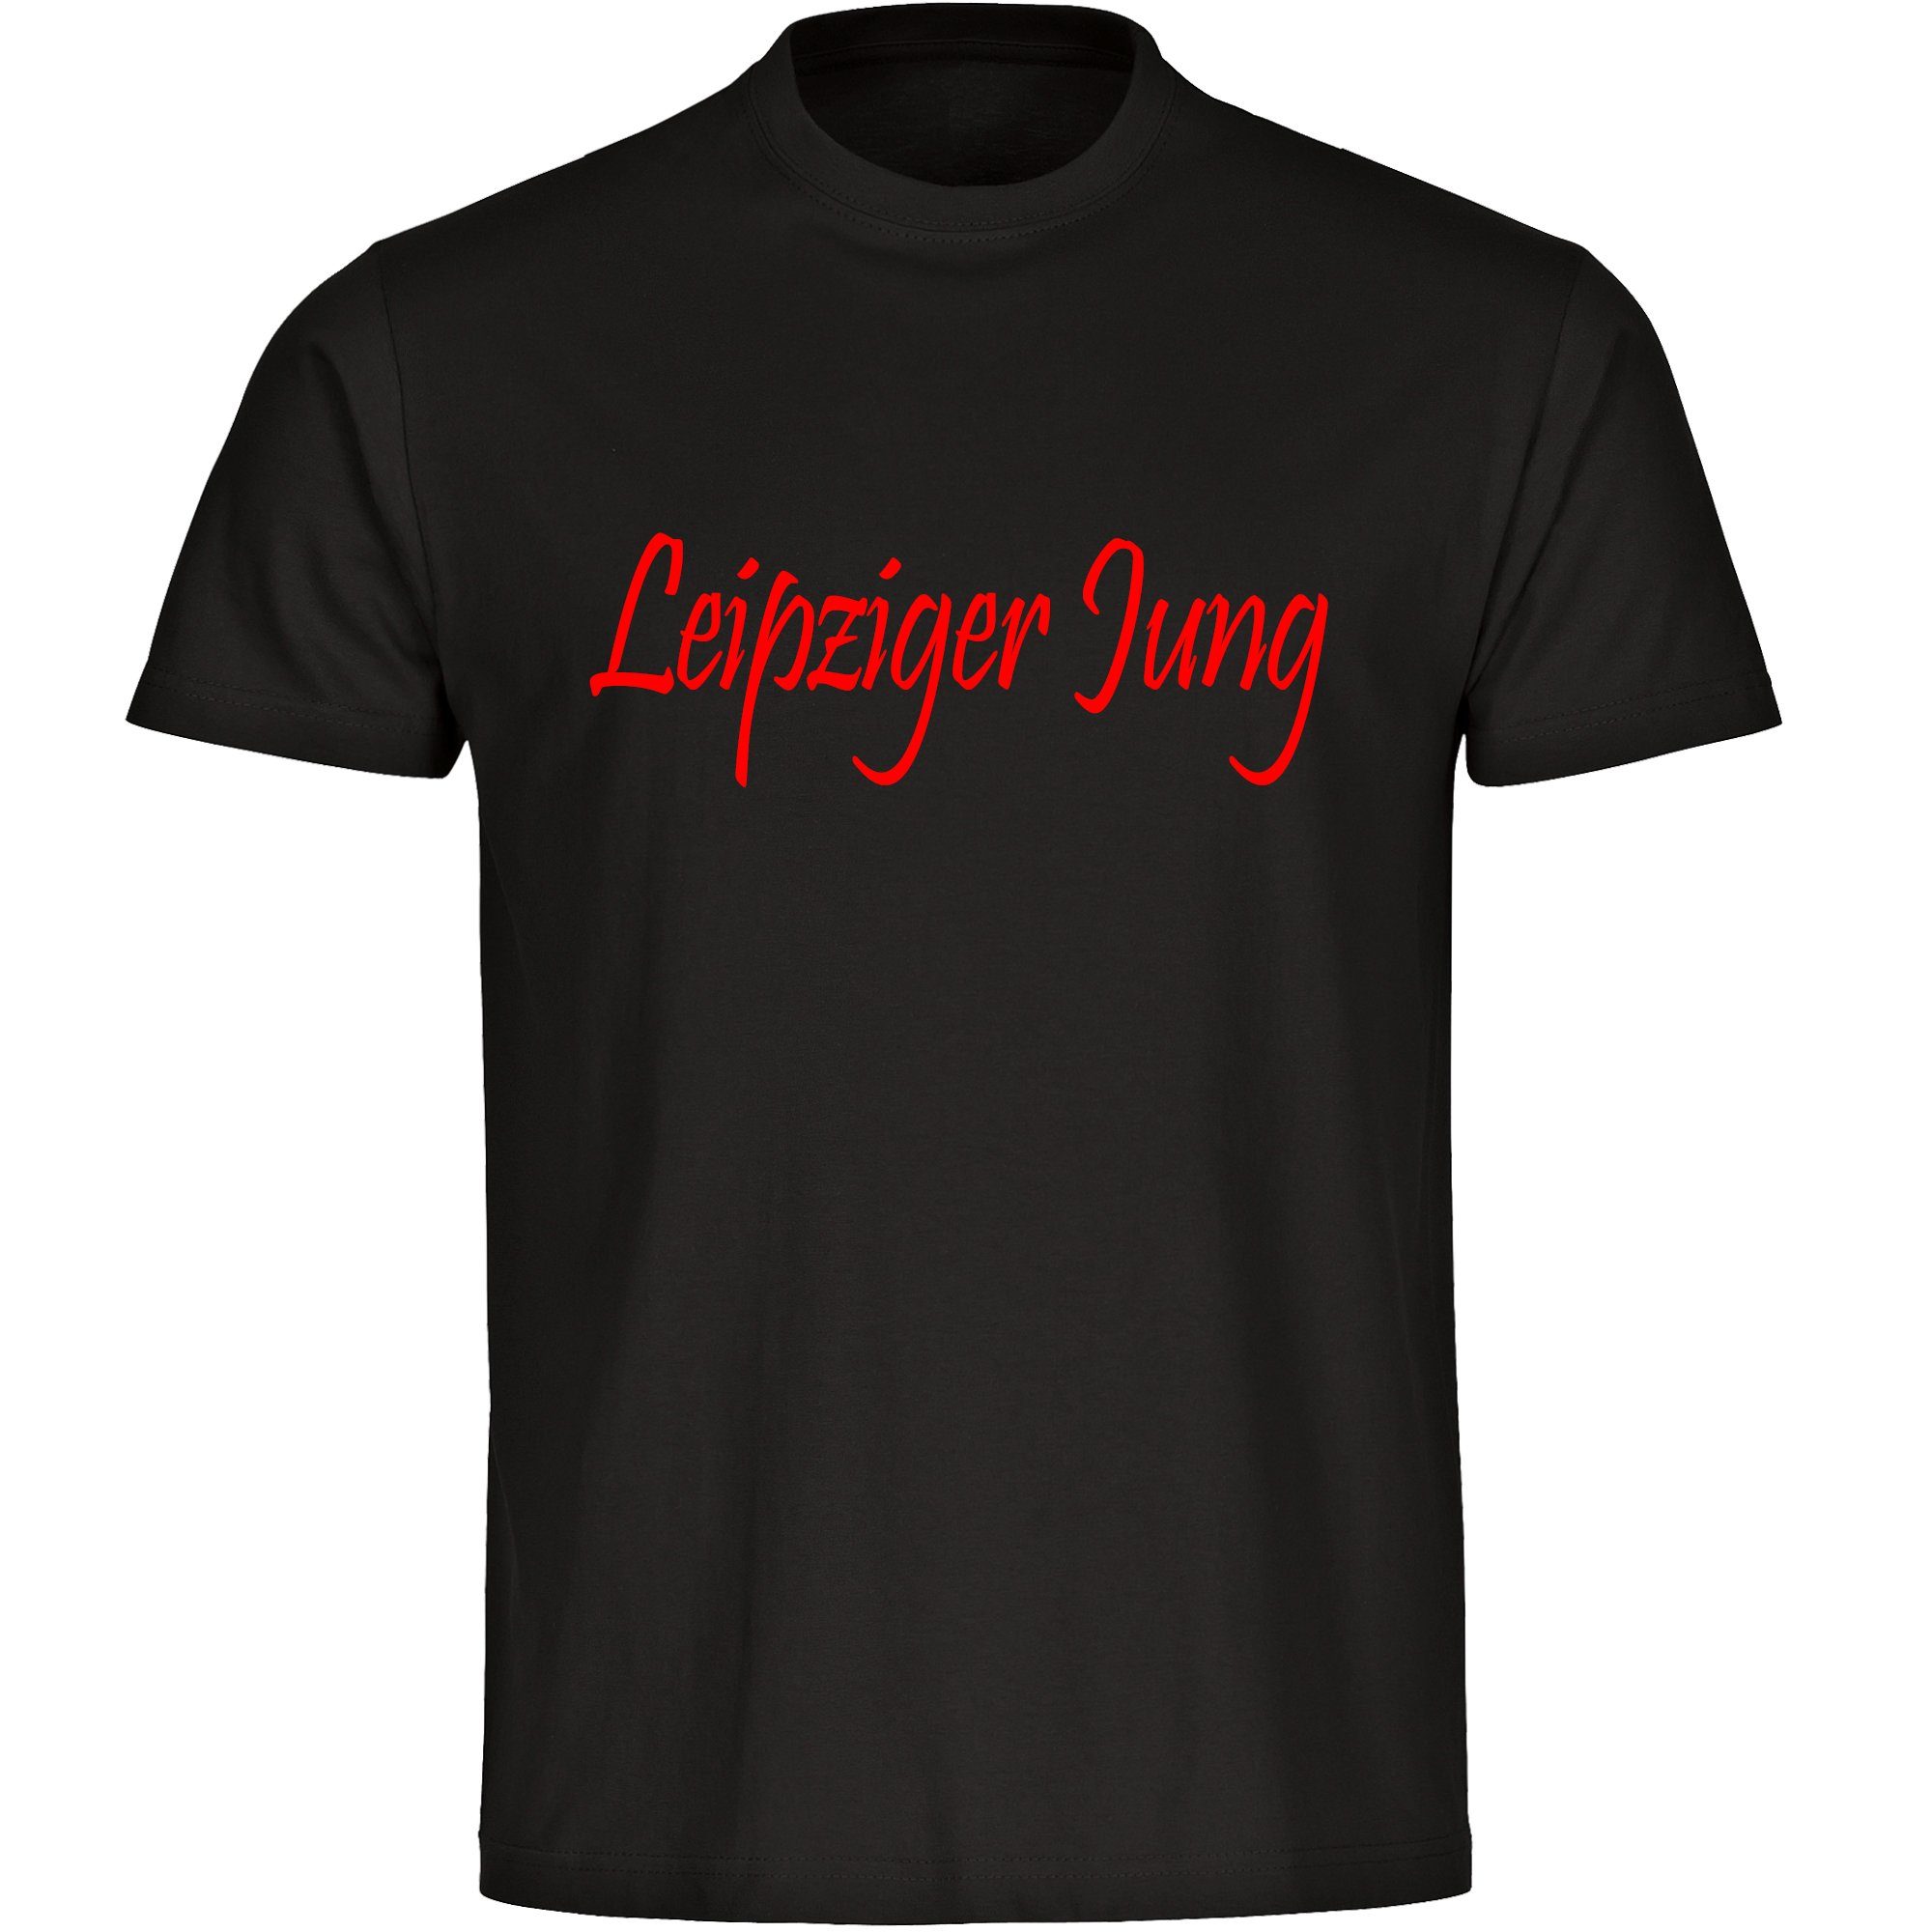 multifanshop T-Shirt Herren Leipzig - Leipziger Jung - Männer